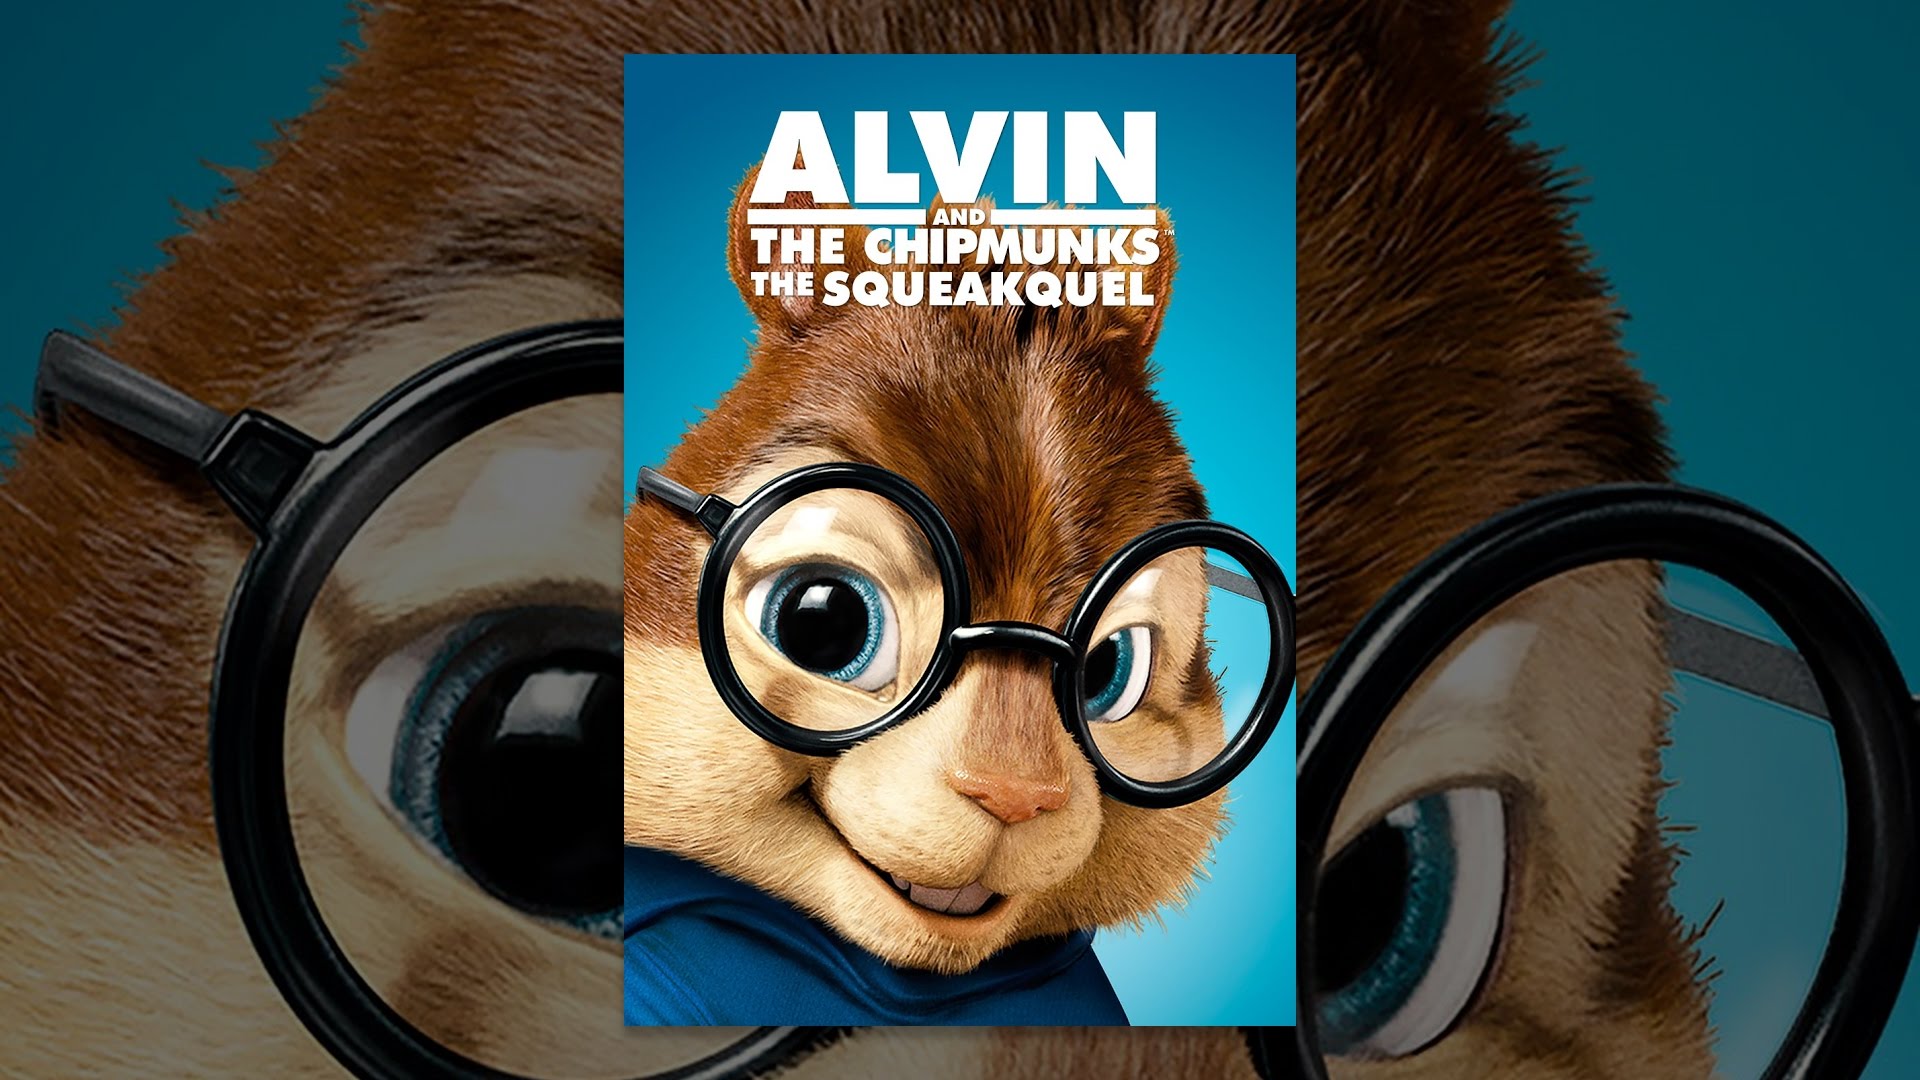 alvin and the chipmunks squeakquel full movie